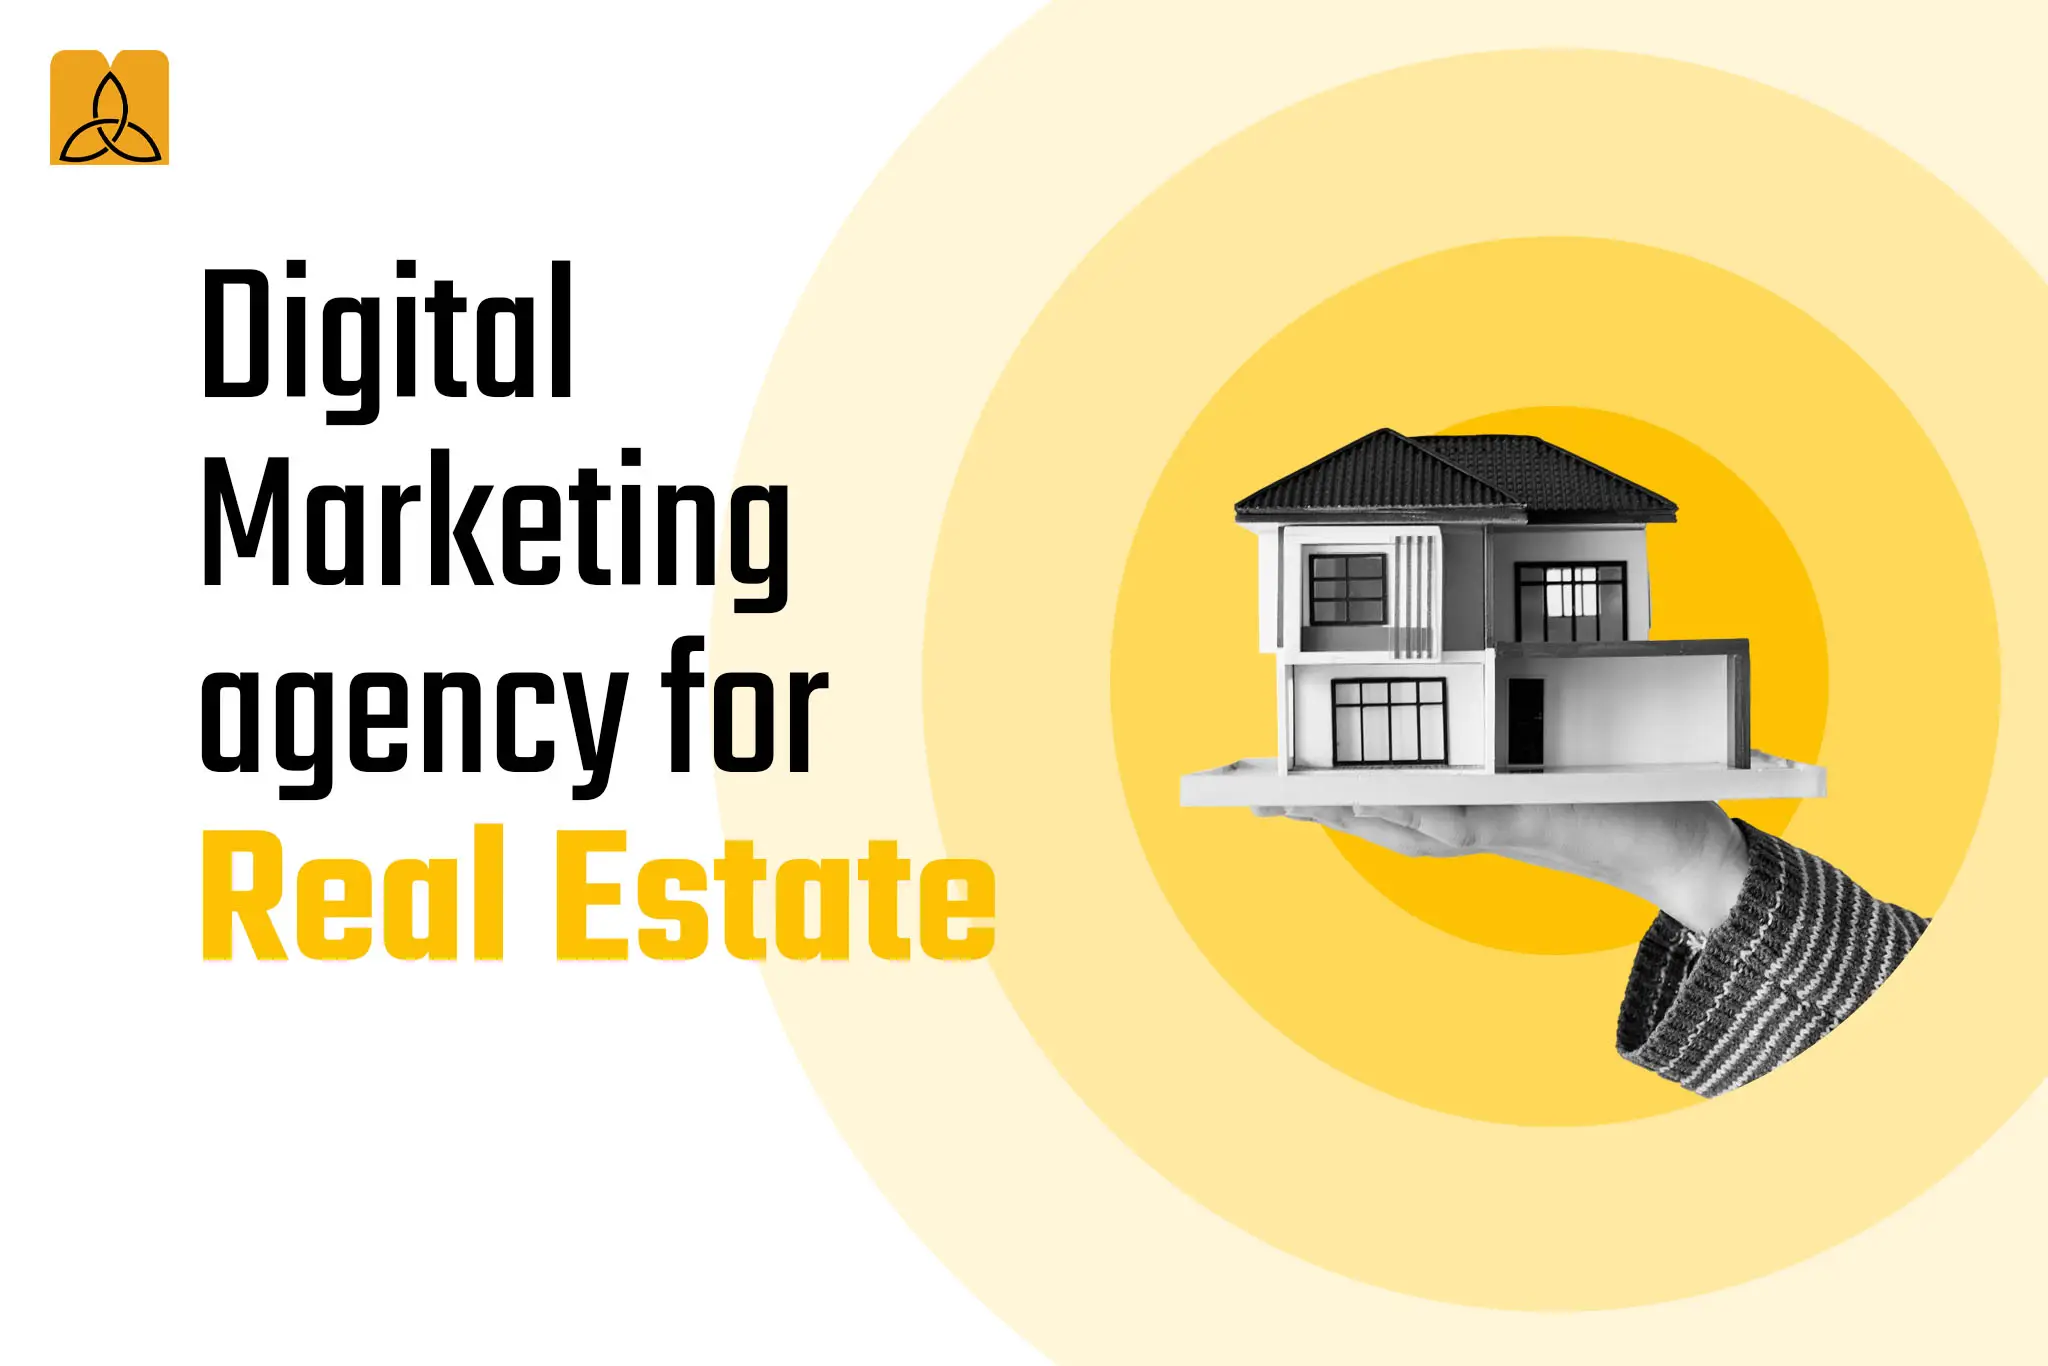 Digital Marketing agency for Real Estate